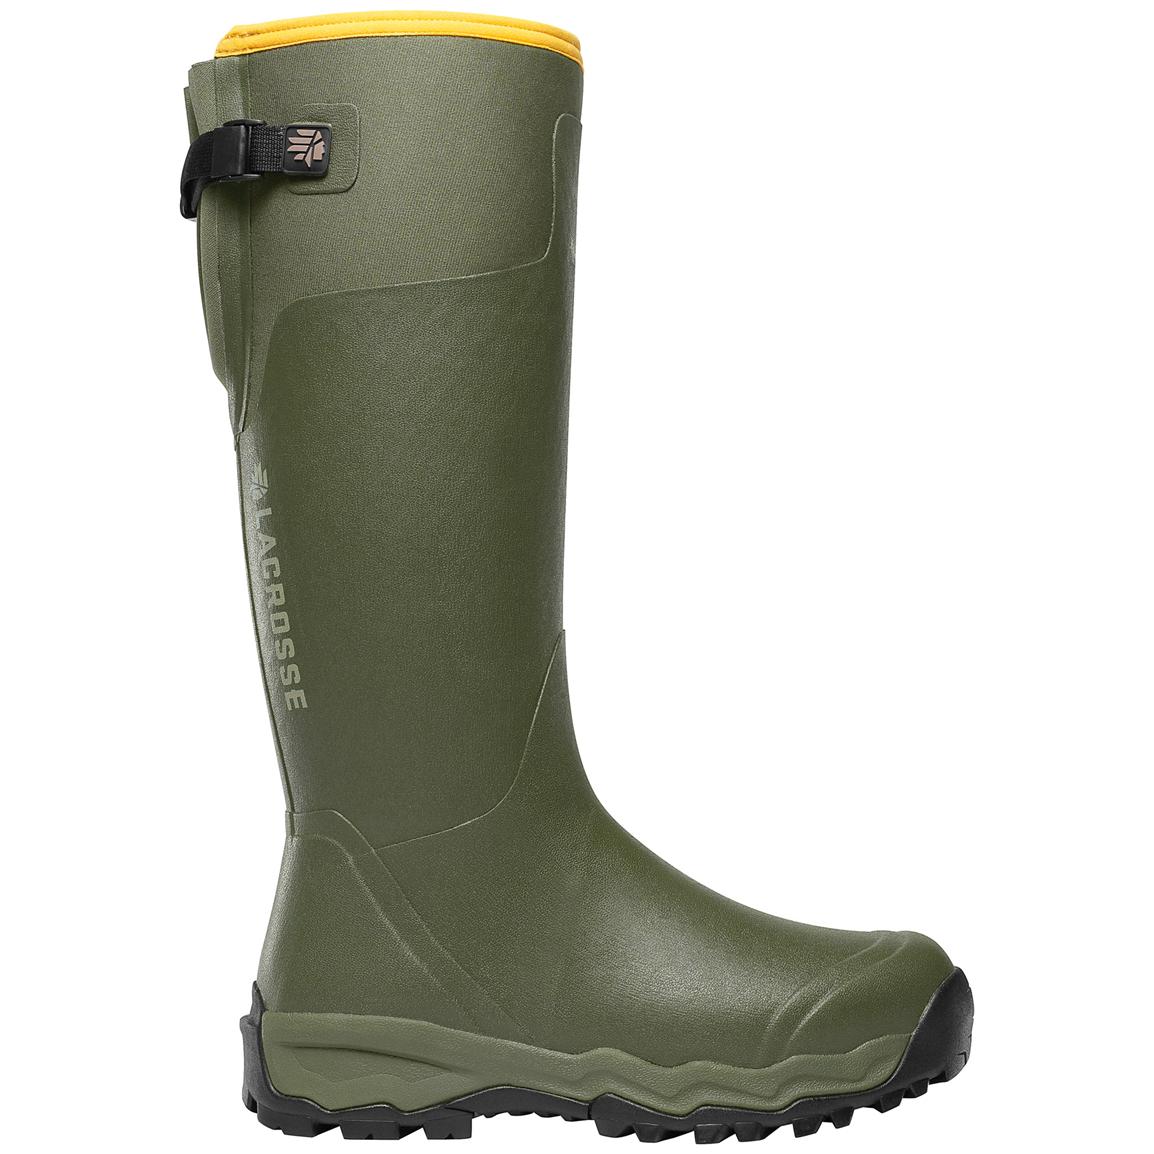 18 inch LaCrosse® Alphaburly Pro 800-gram Thinsulate® Ultra Insulation Hunting Boots, Forest Green